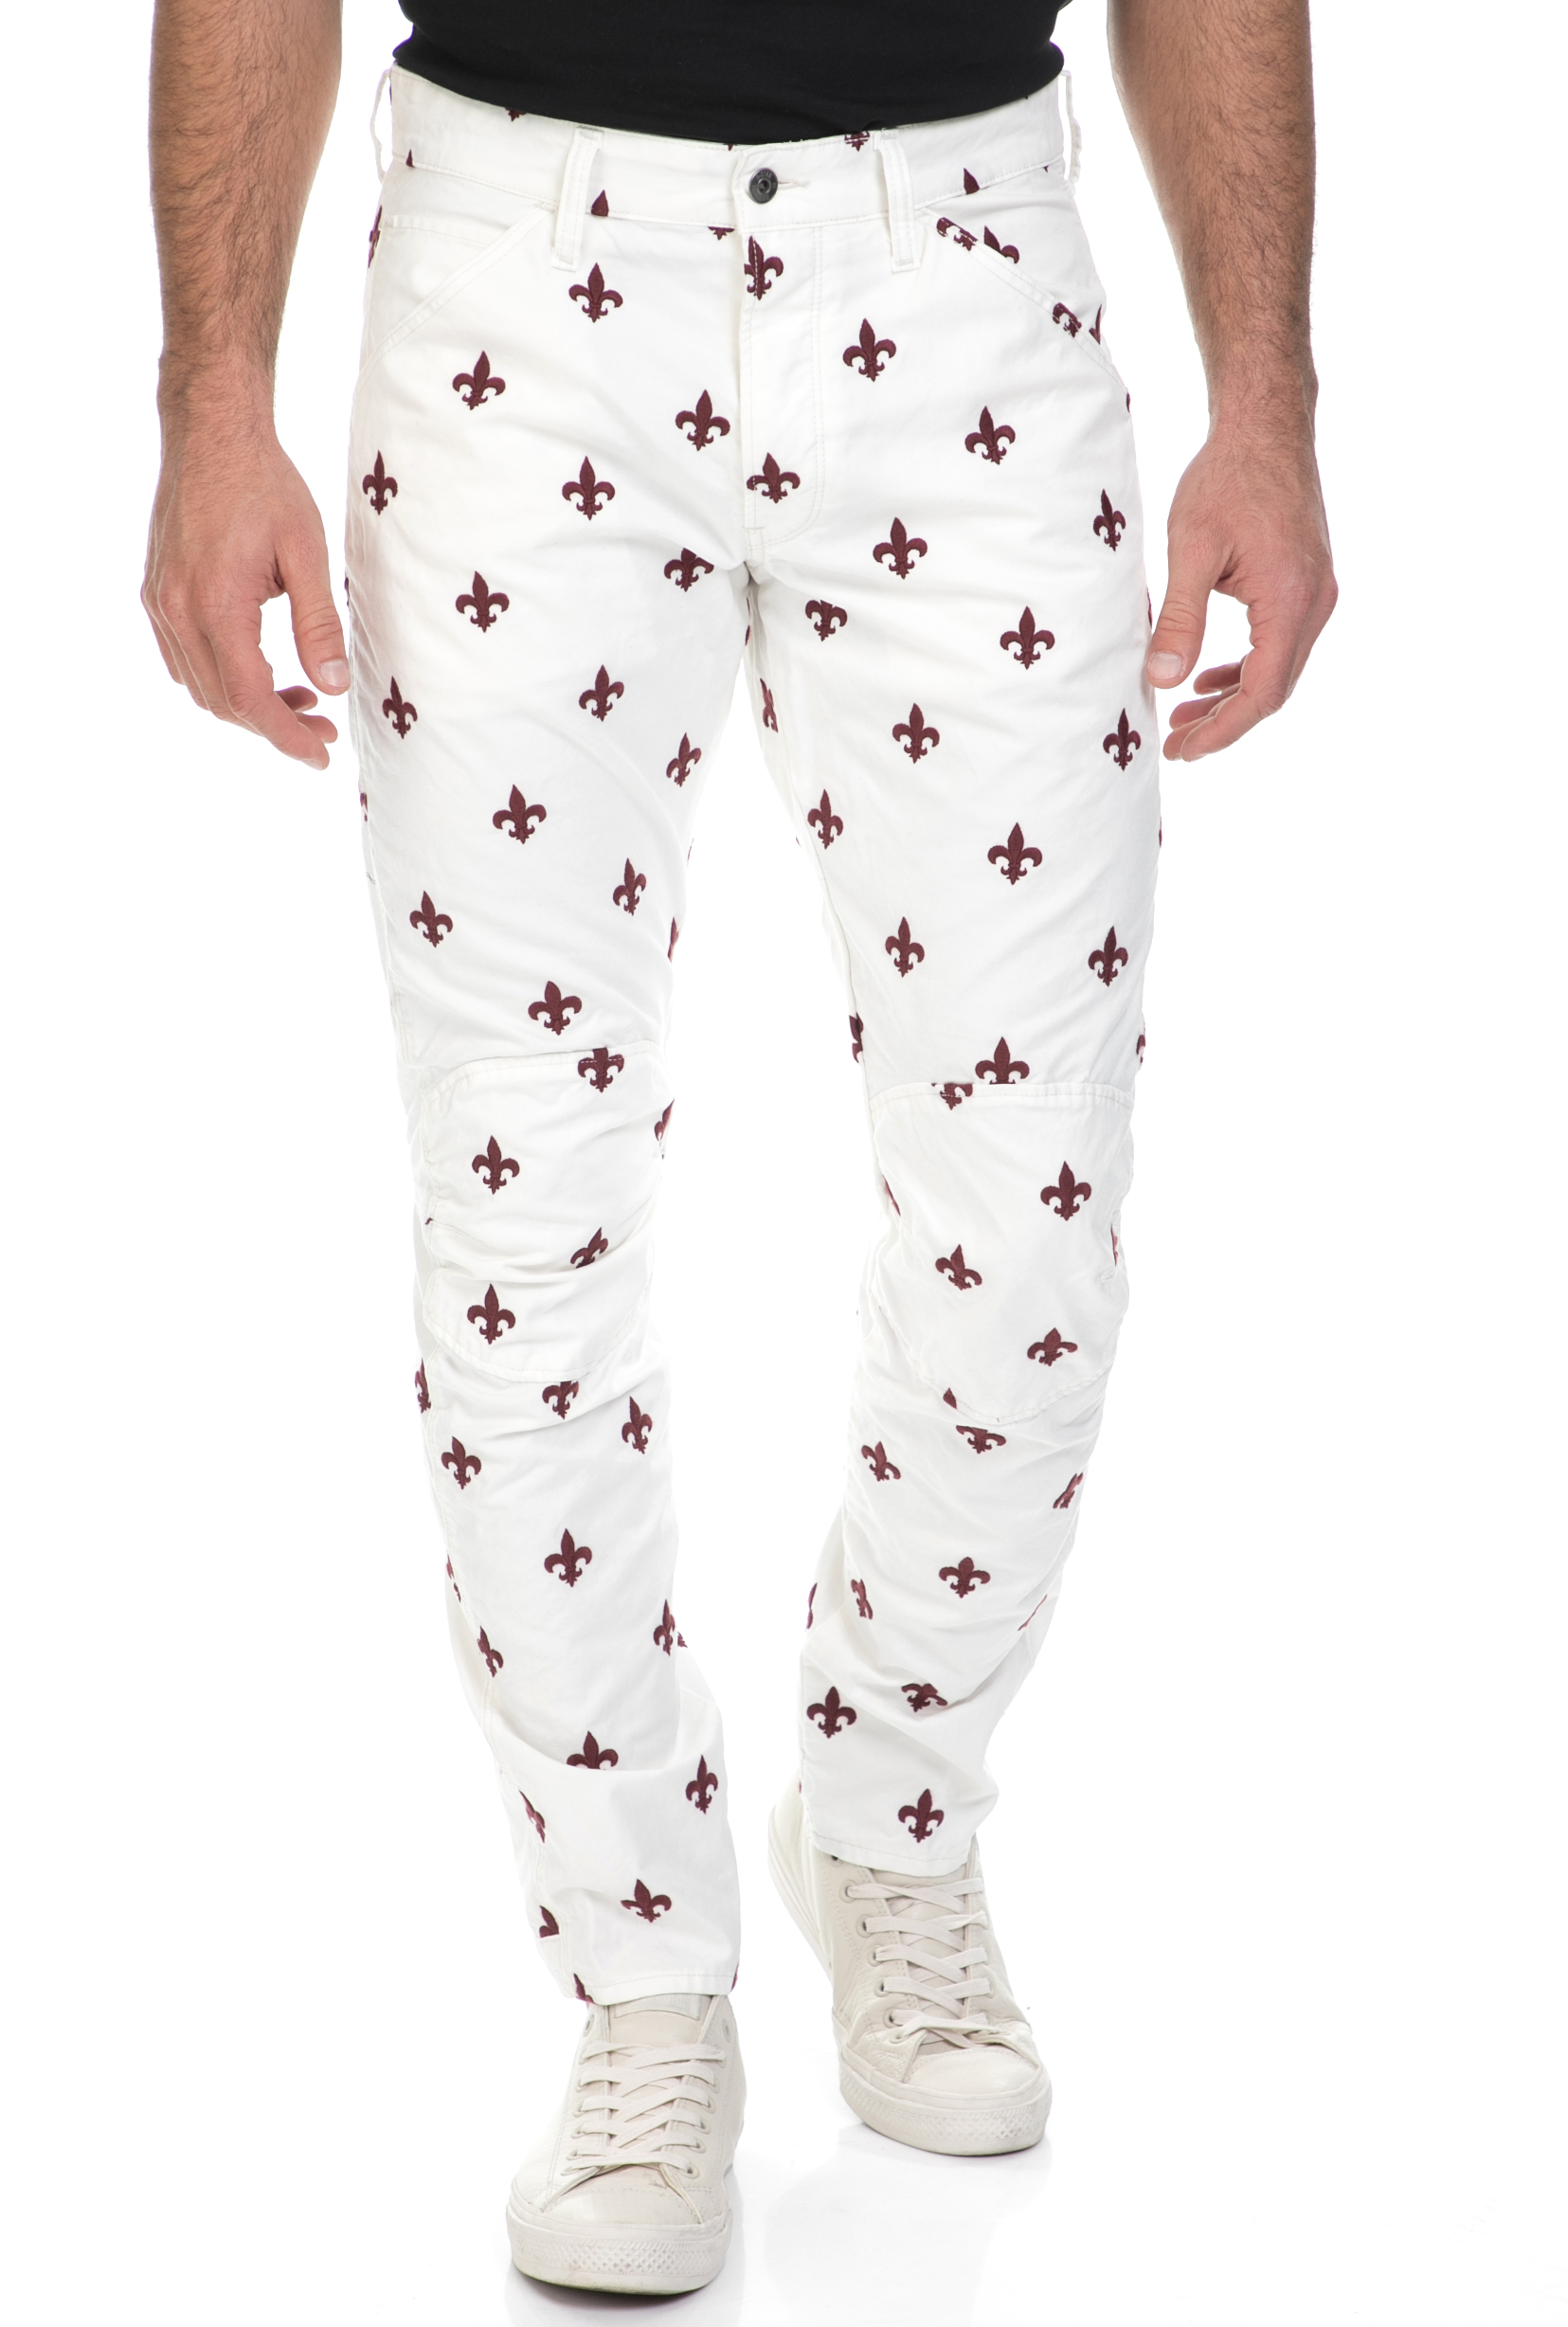 G-STAR RAW - Ανδρικό παντελόνι 3D TAPERED COJ G-STAR λευκό-κόκκινο Ανδρικά/Ρούχα/Παντελόνια/Chinos